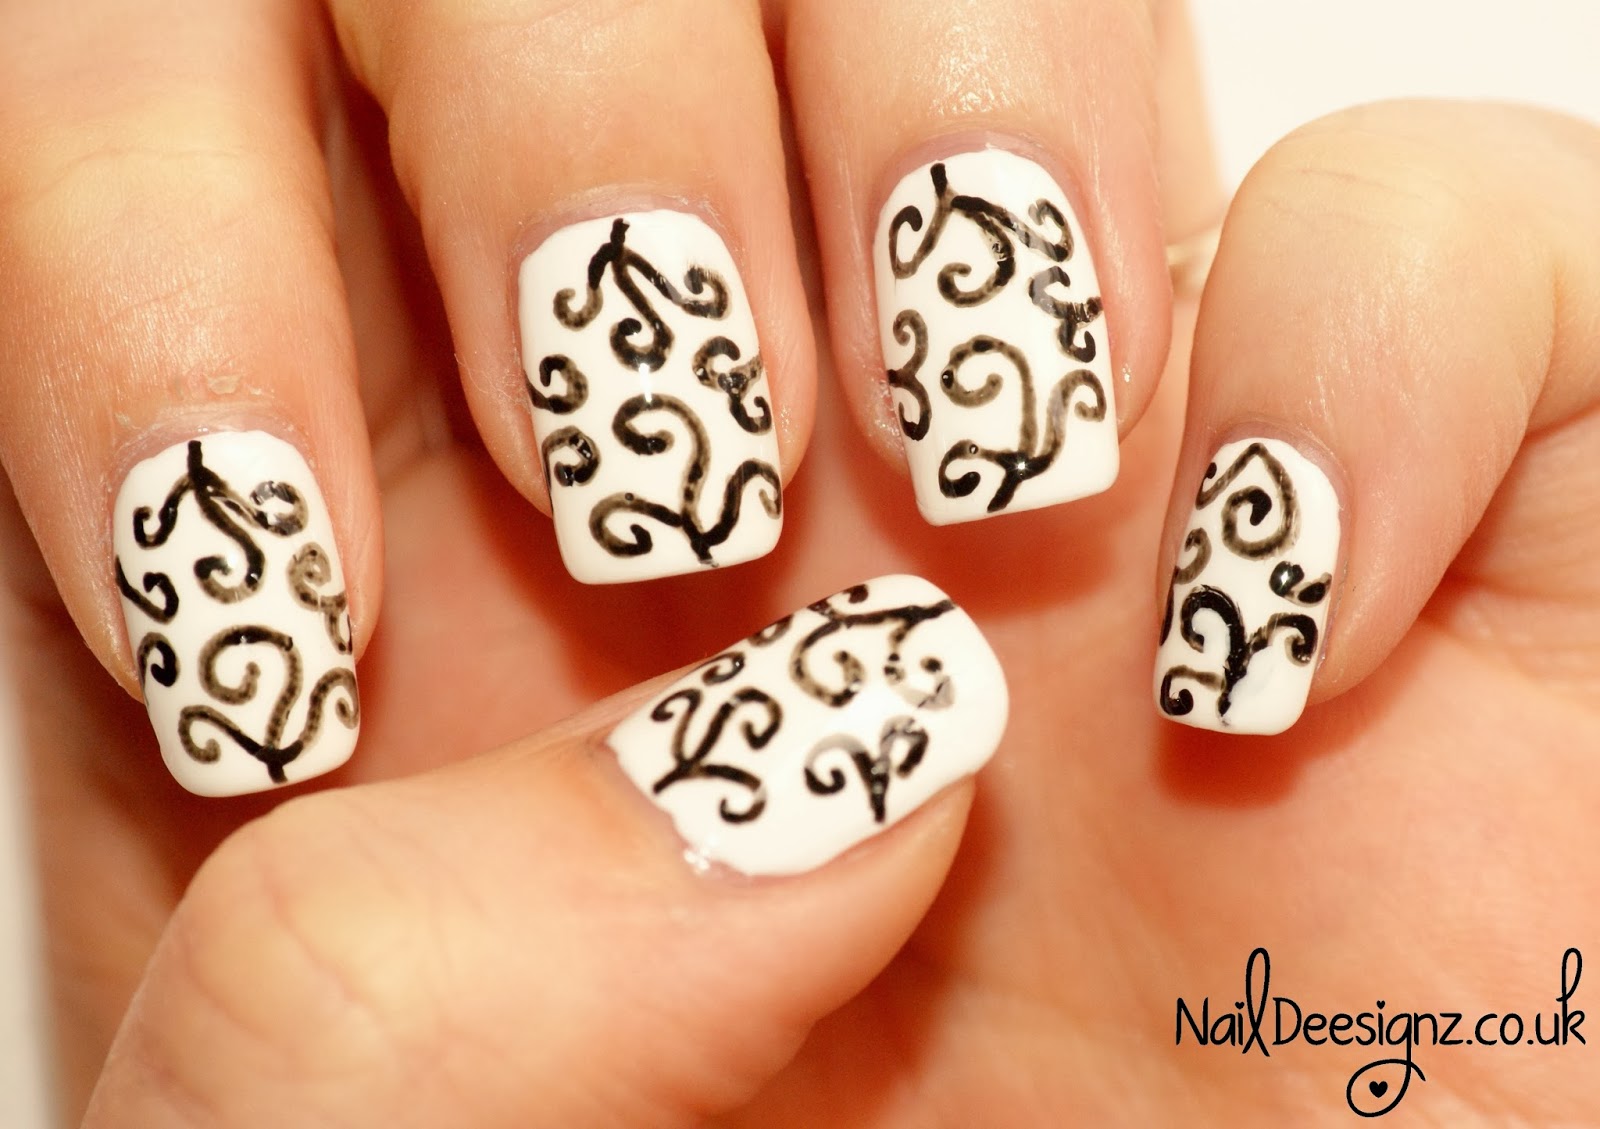 nail design with swirls